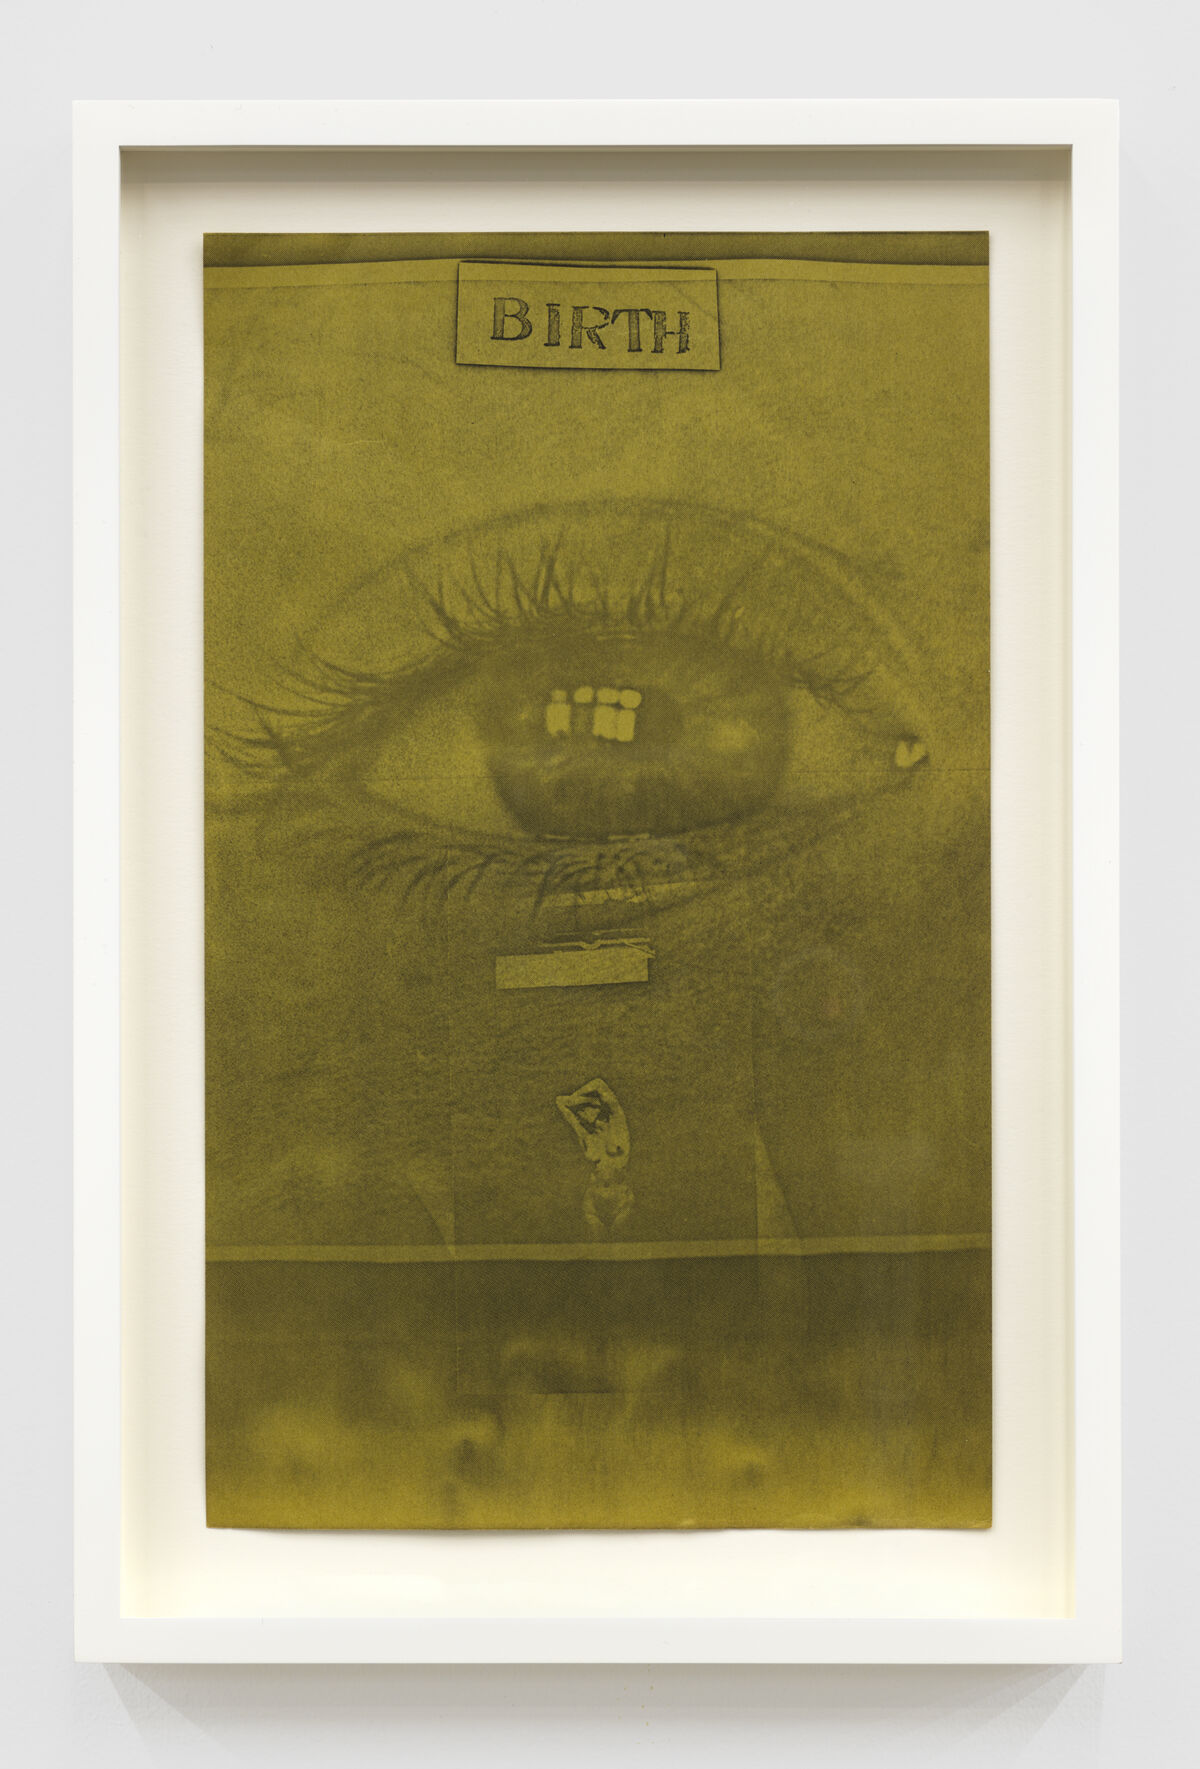 Barbara T. Smith, Xerox, Birth, 1965-66. Courtesy of Andrew Kreps Gallery. 